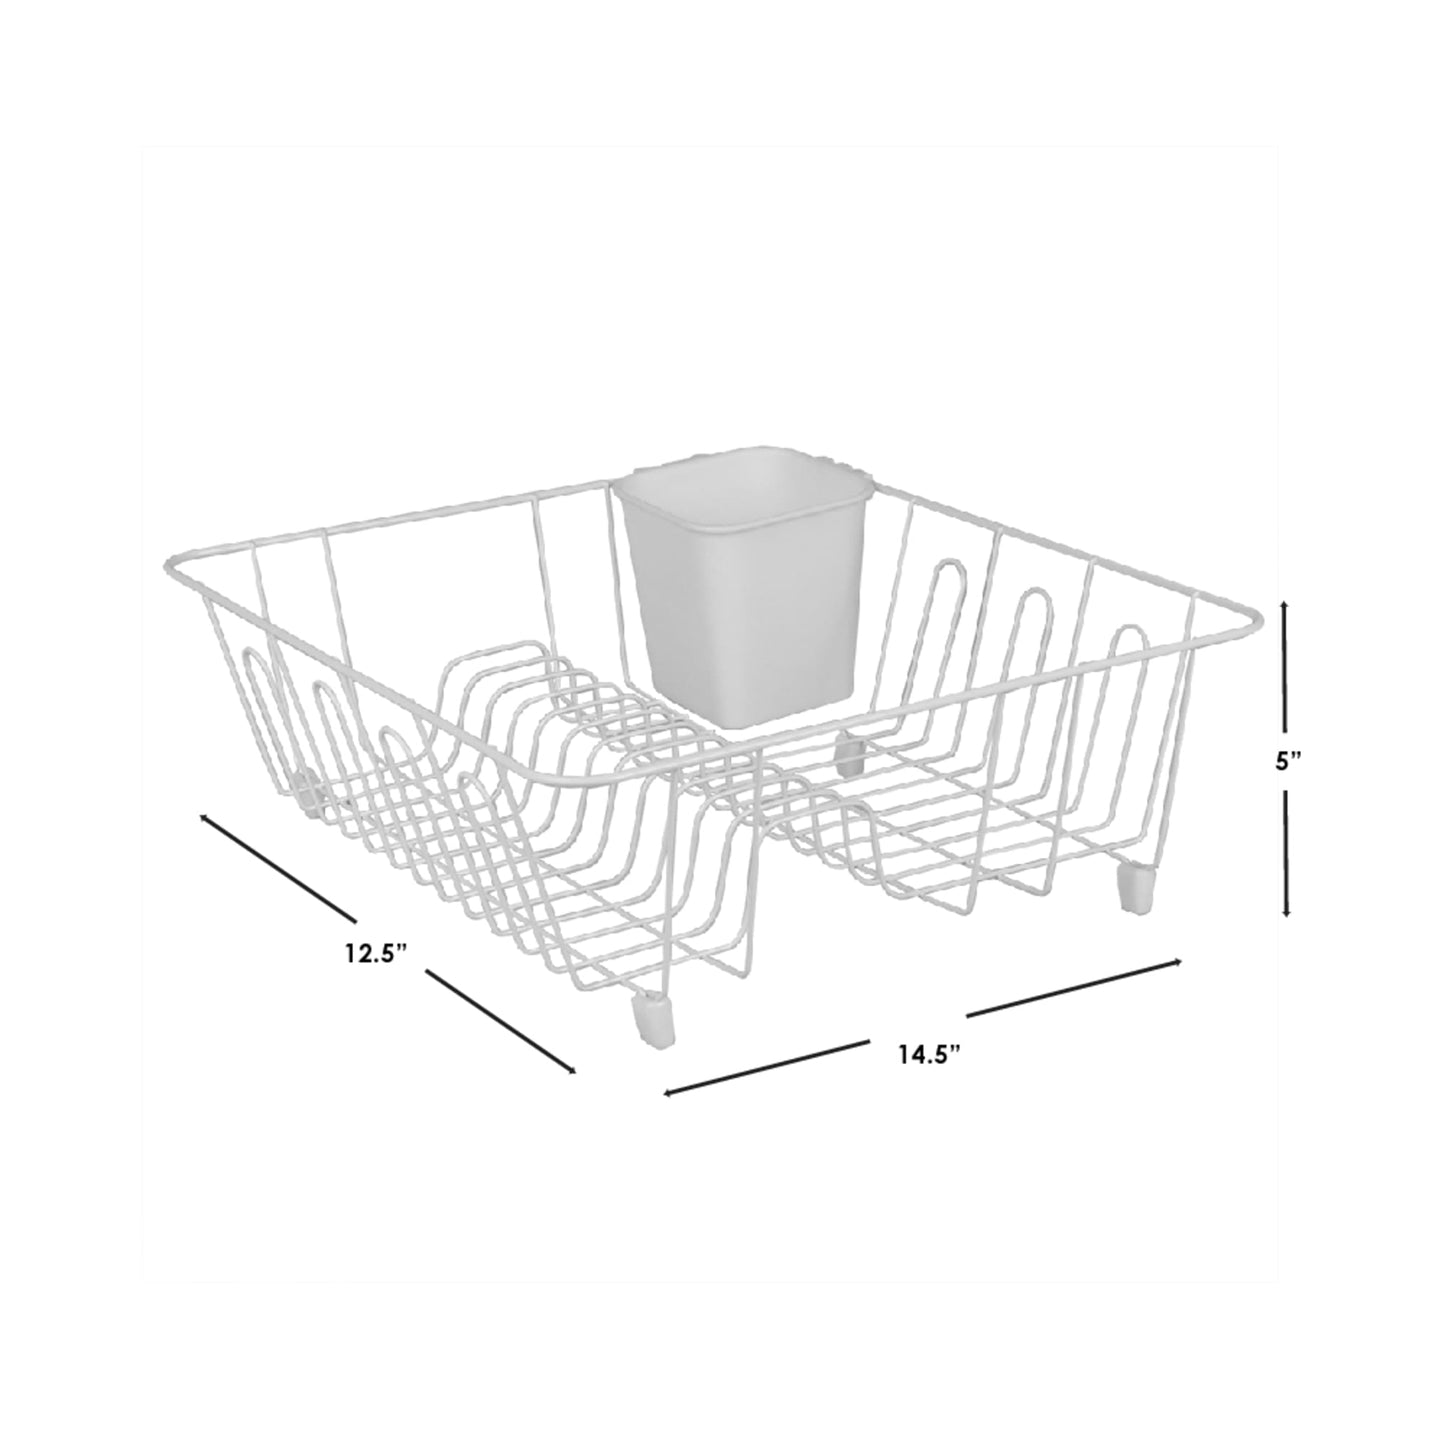 Dish Drying Rack, Rubbermaid Dish Rack with Utensil Holder for